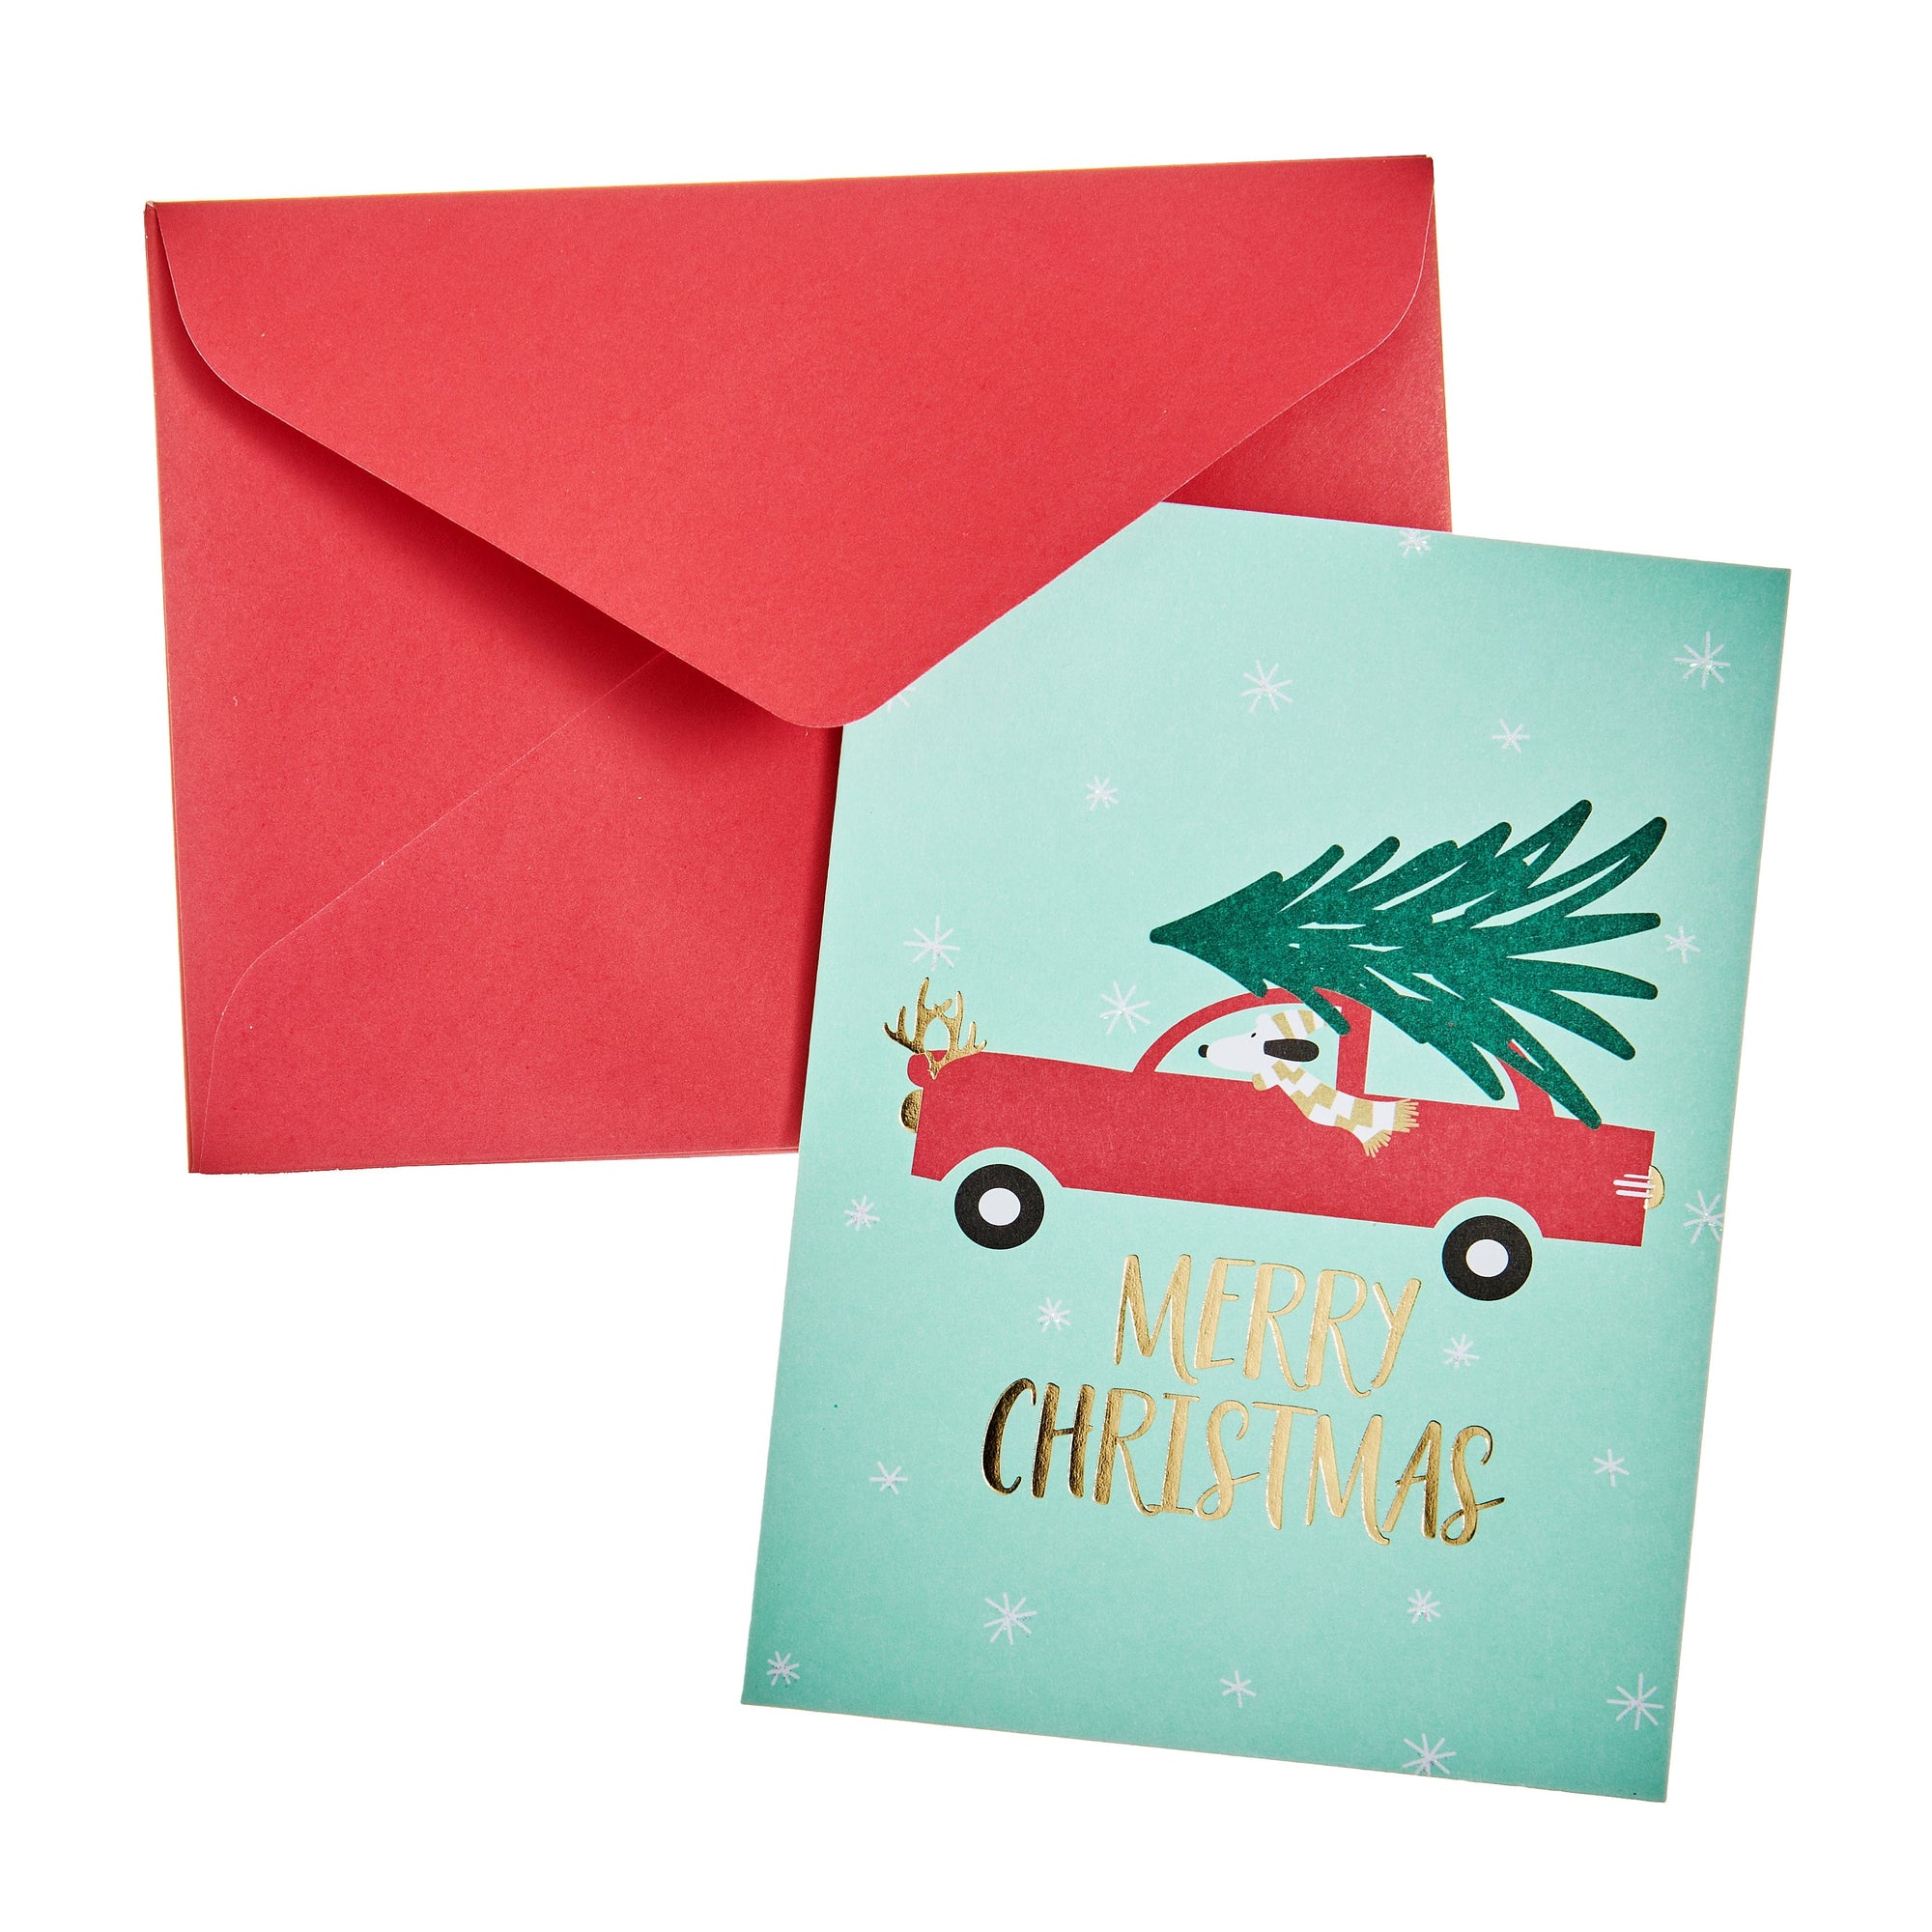 Merry Christmas Cards - Set of 20 Gartner Studios Cards - Christmas